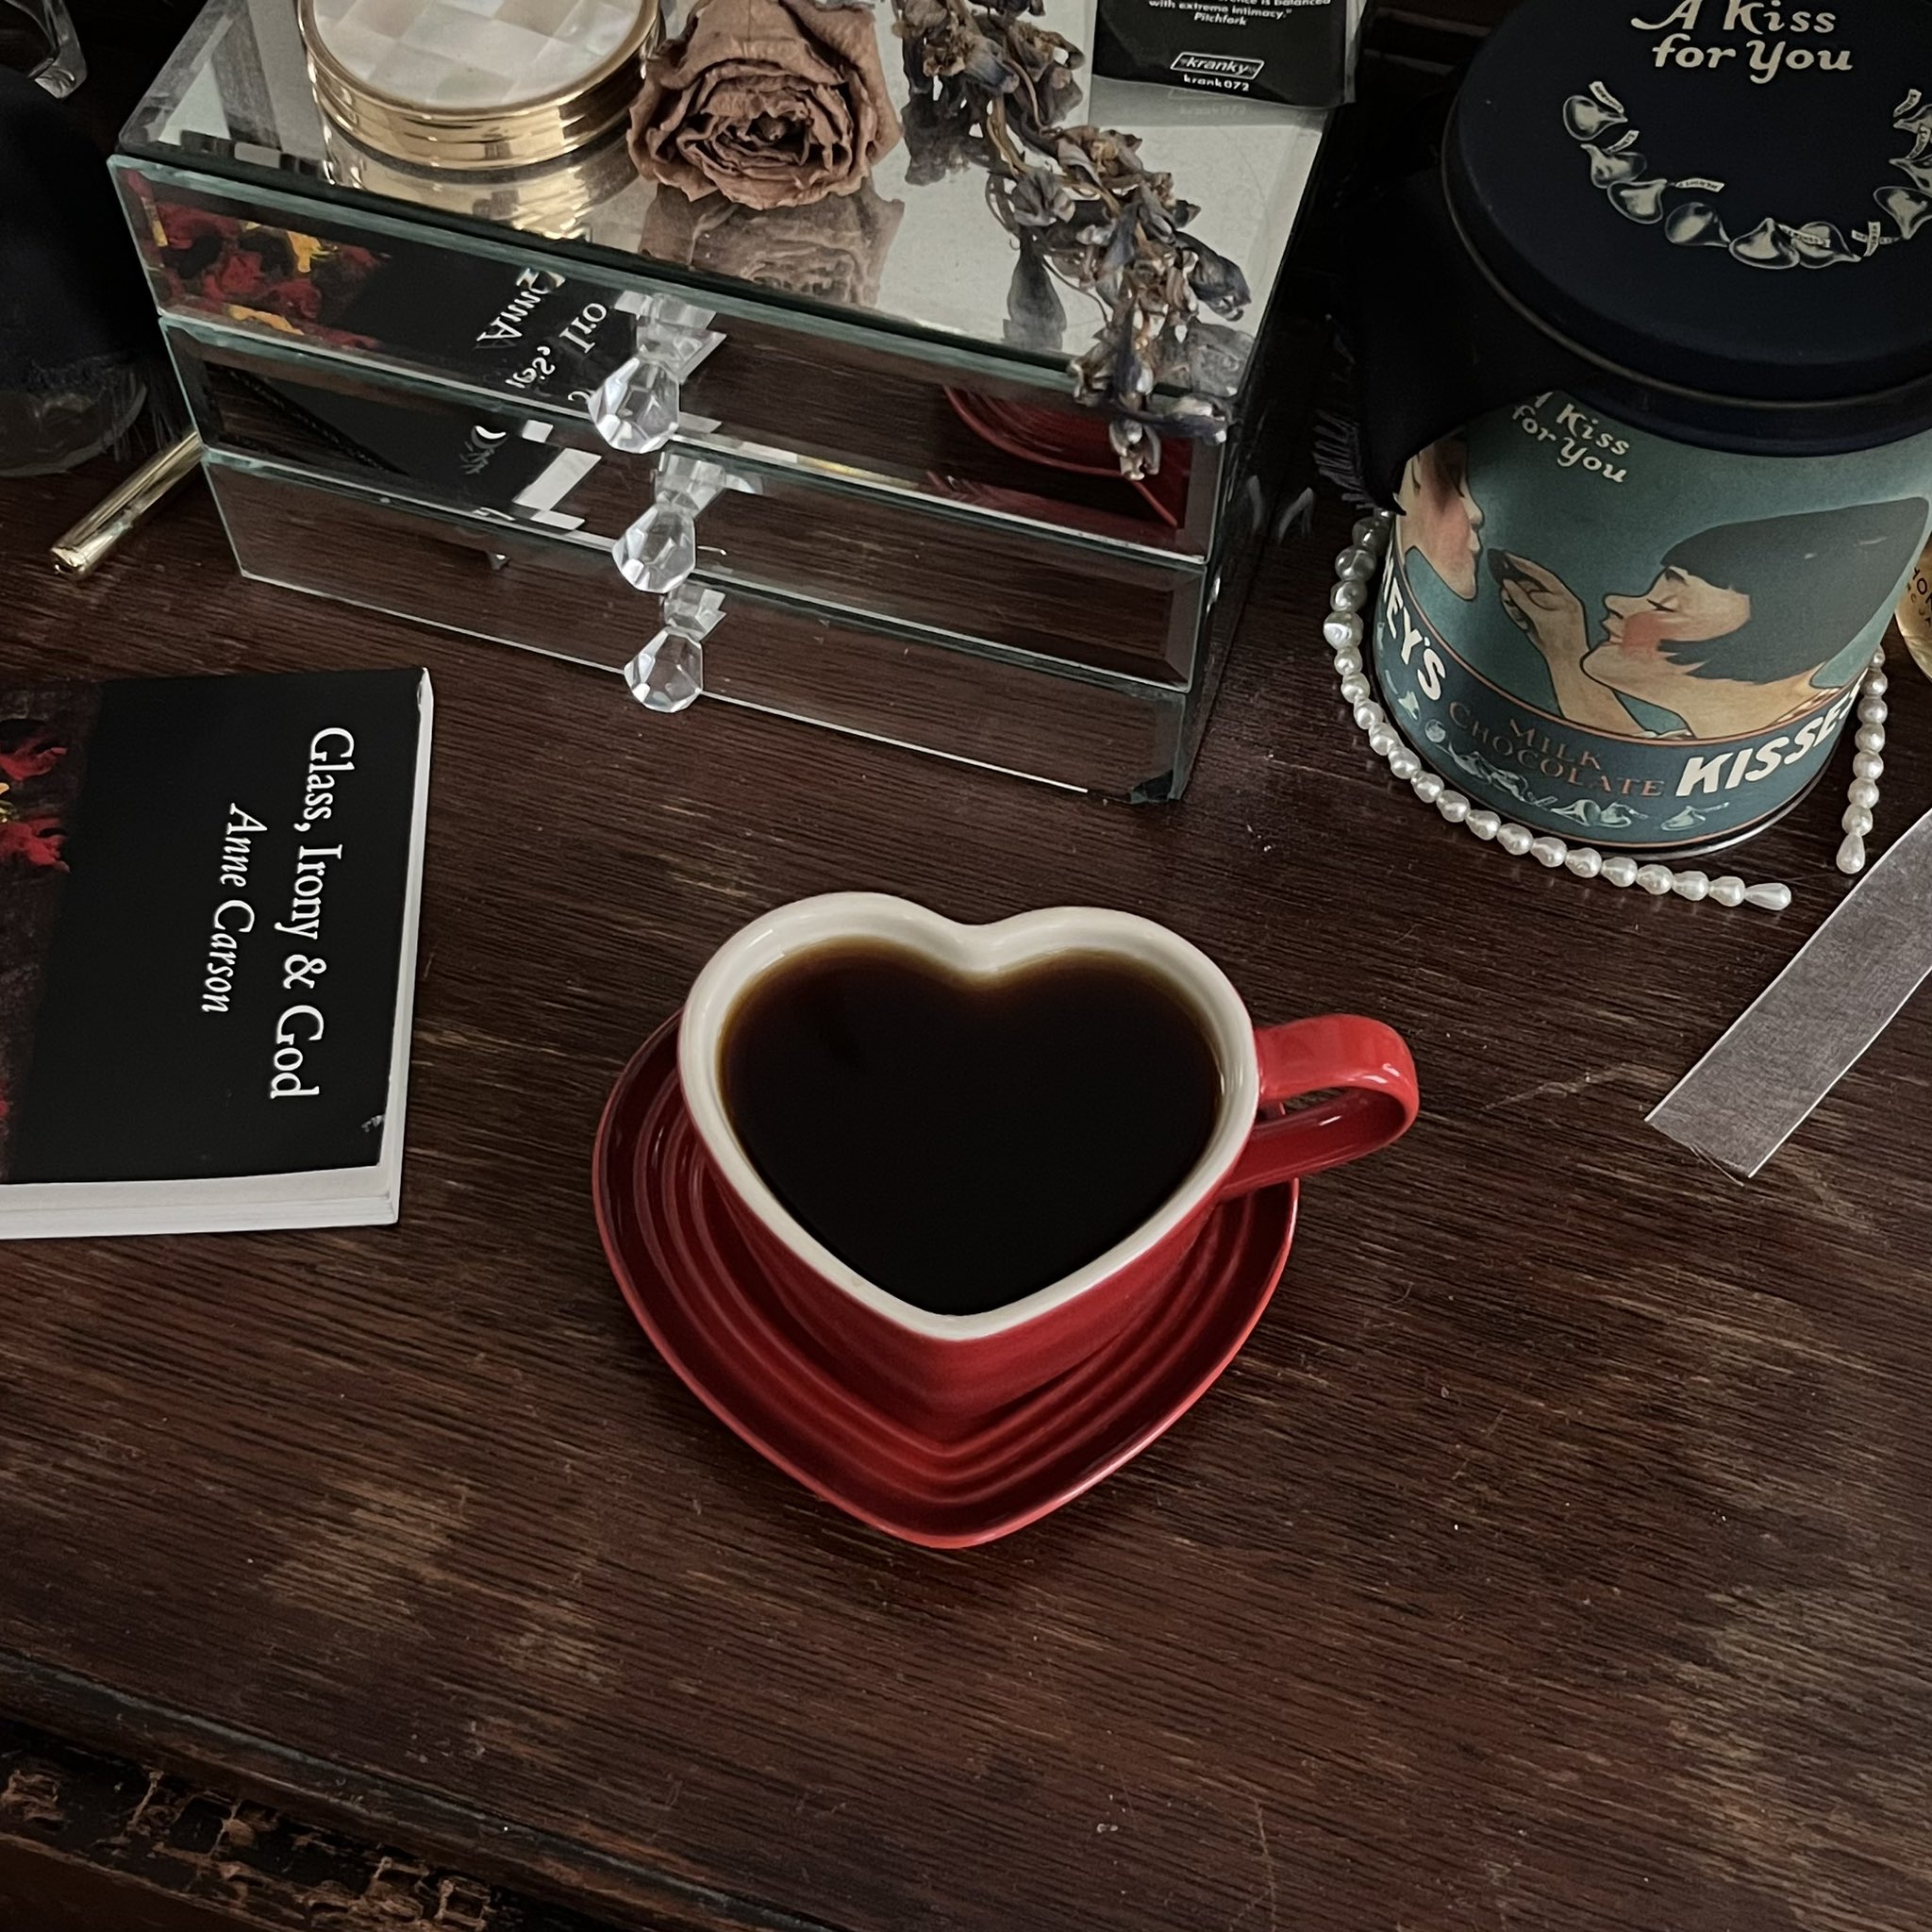 on X: "Heart shaped le creuset mug has changed my fuckign life  https://t.co/eT4YdU6ogw" / X